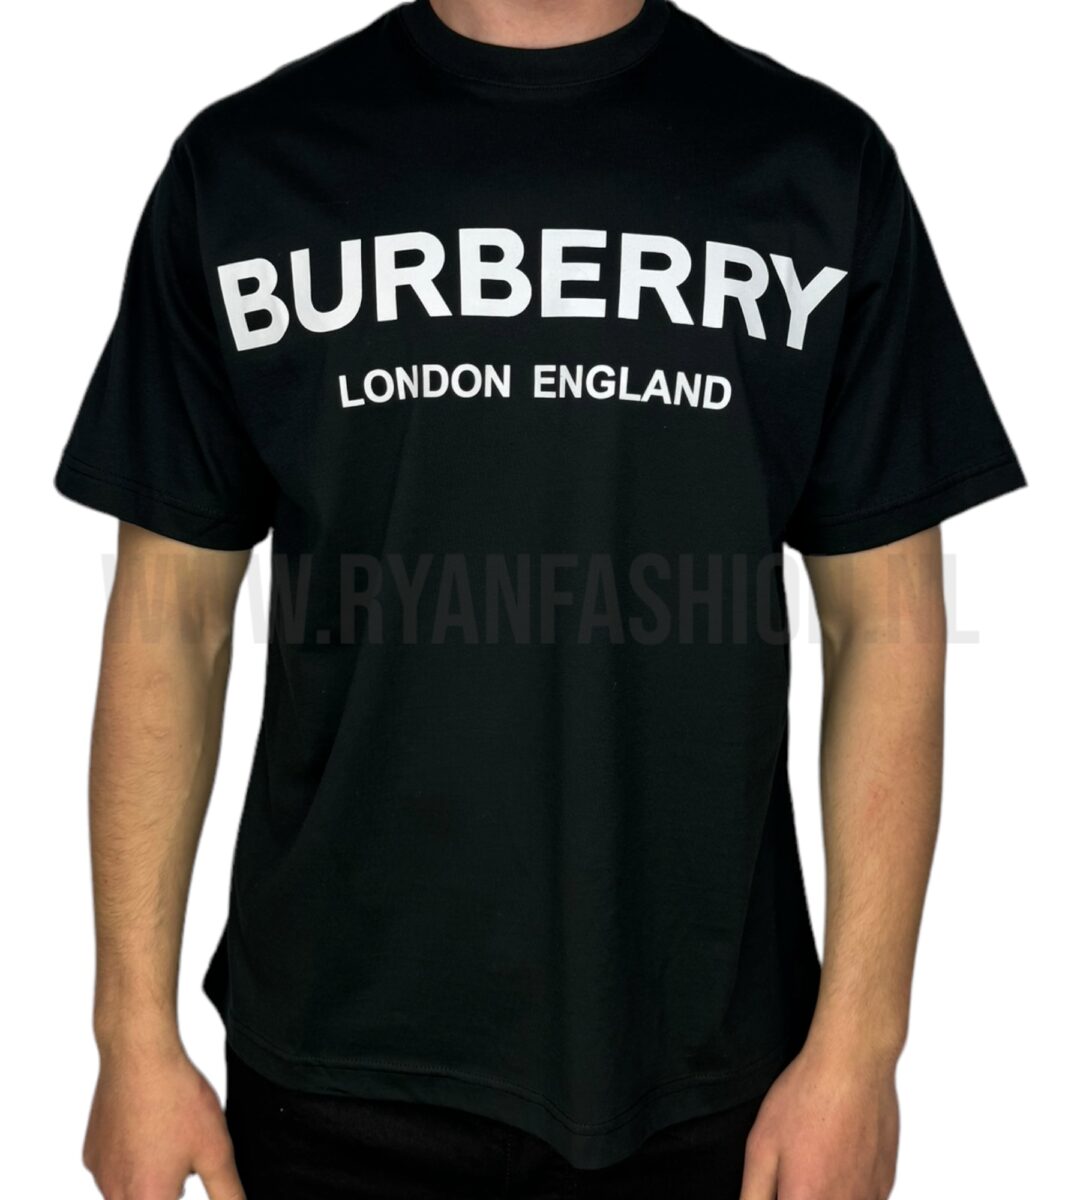 Burberry London England T-Shirt Black